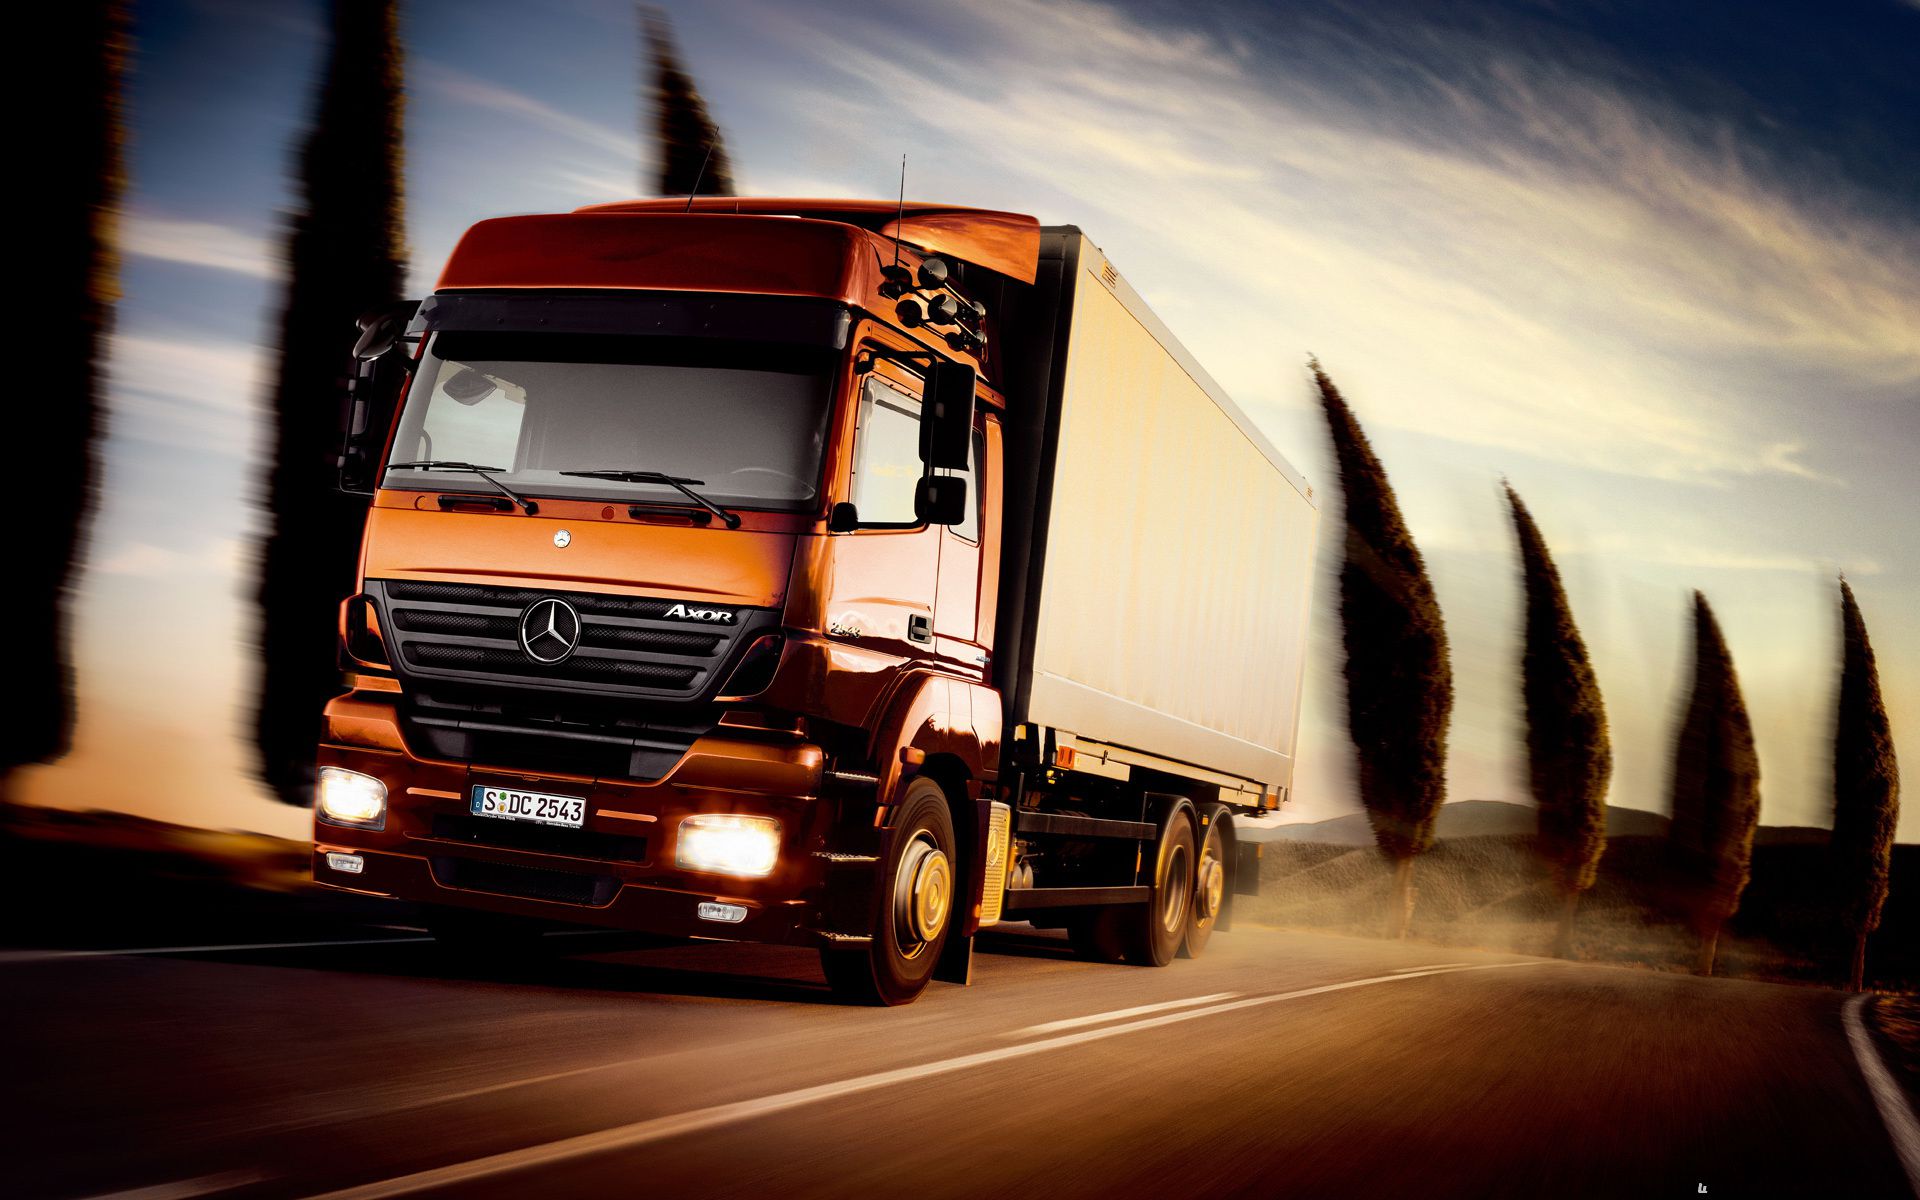 transport wallpaper,transport,mode of transport,vehicle,commercial vehicle,trailer truck